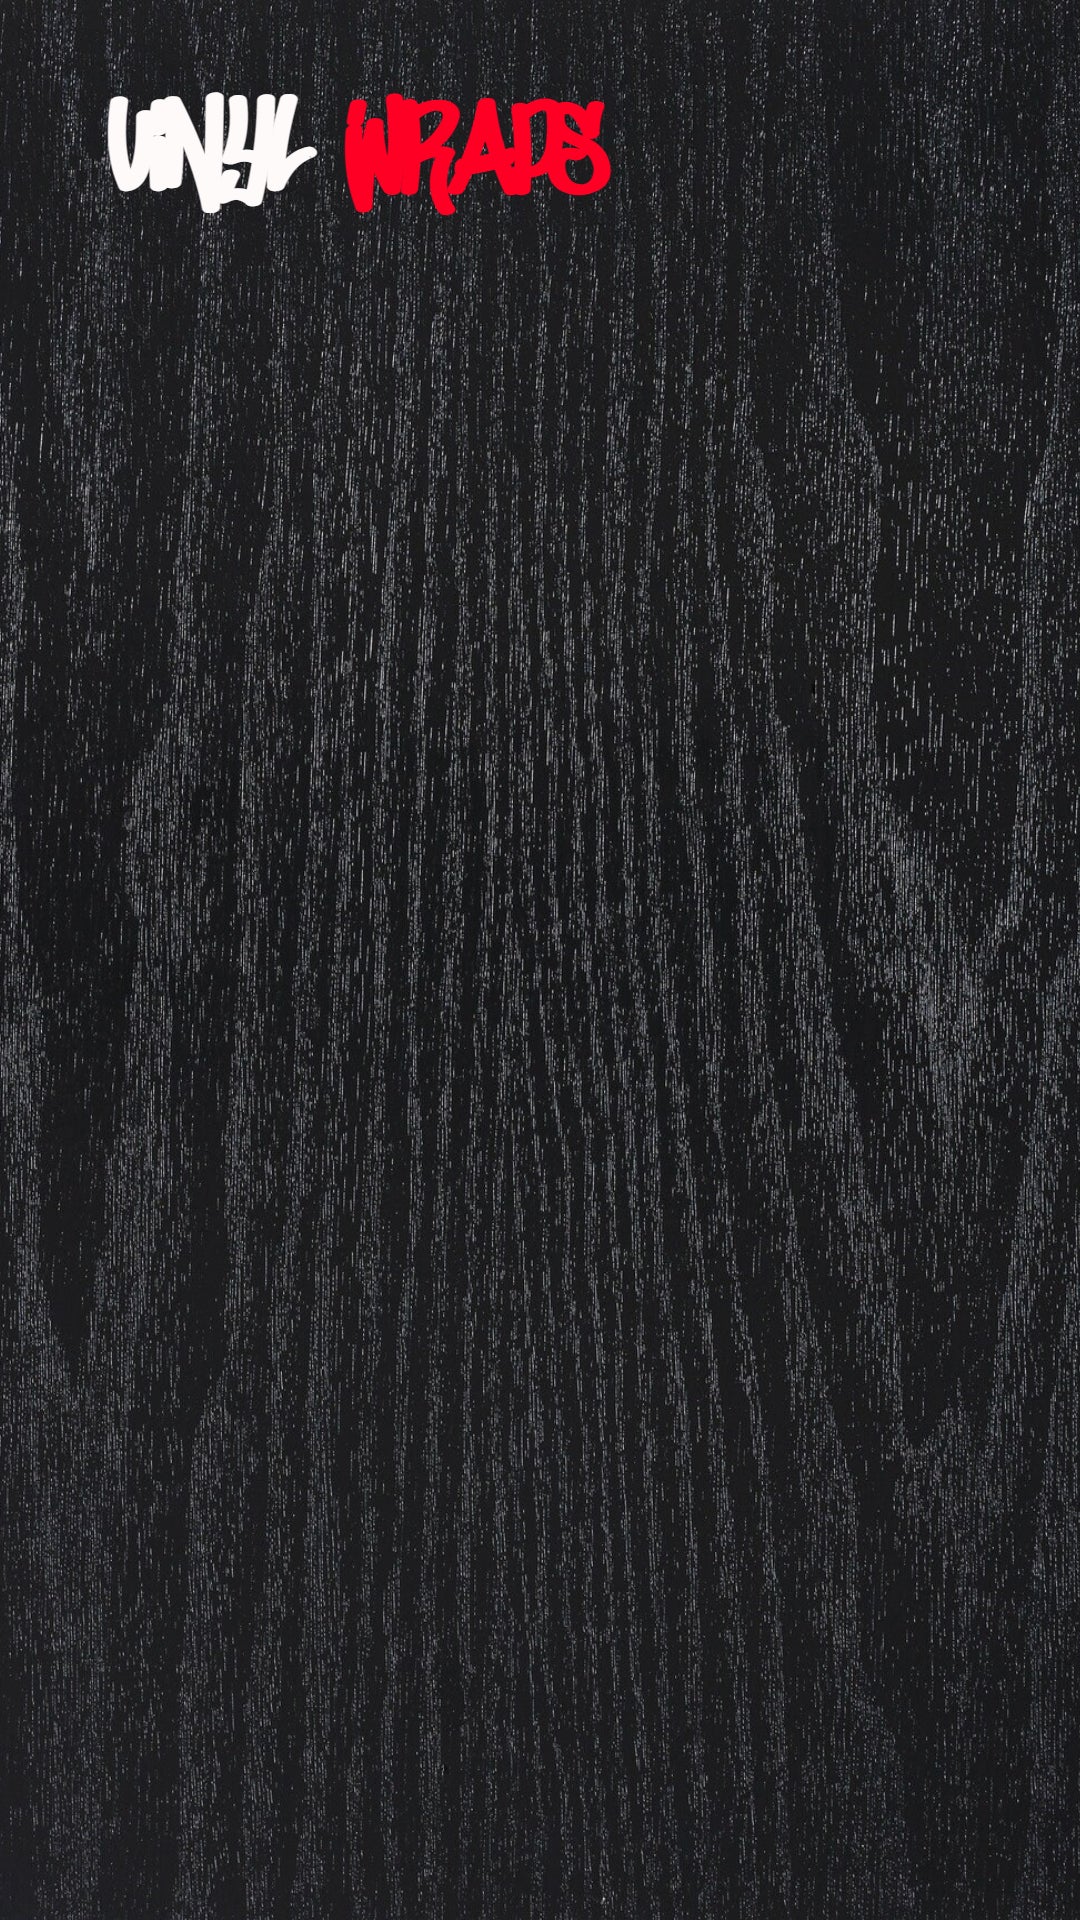 Black Wood Grain Vinyl Wrap